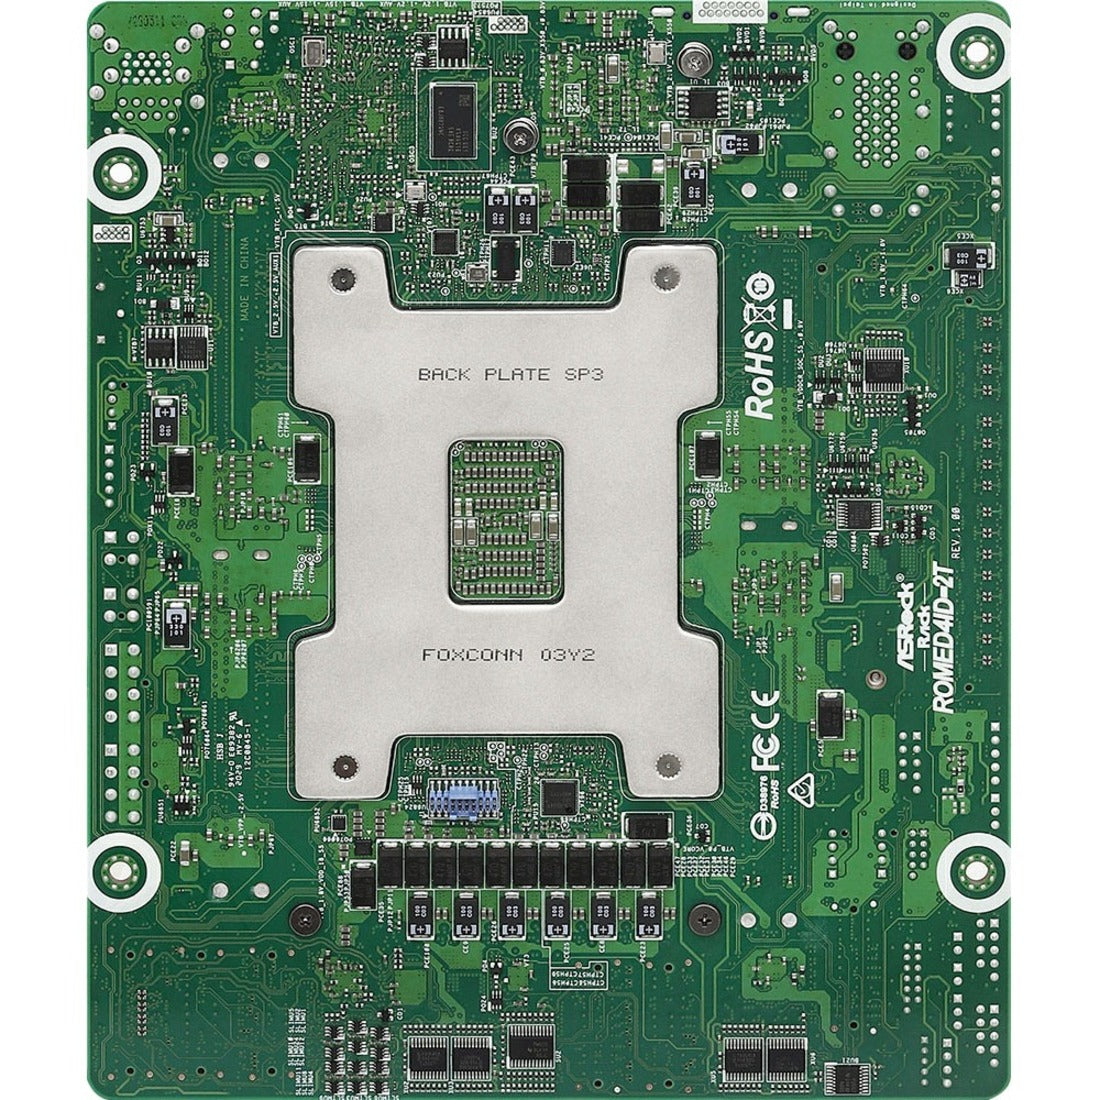 ASRock ROMED4ID-2T AMD EPYC 7002 SP3 LGA4094 DDR4 Deep mini-ITX Desktop Motherboard, AST2500 Graphics, 256GB Max Memory, 16 SATA Interfaces